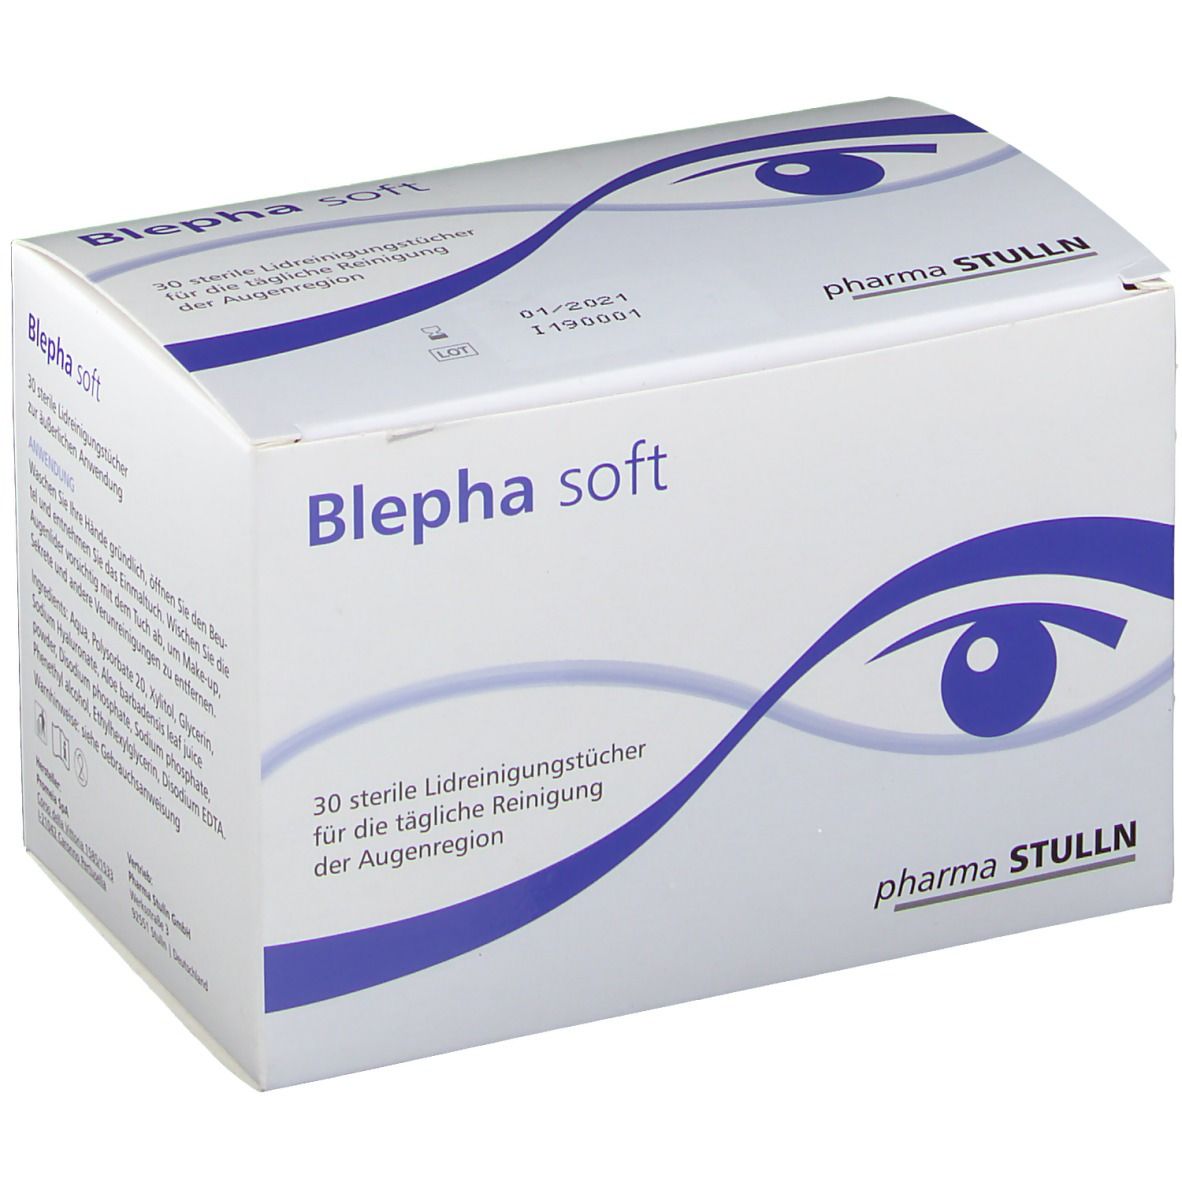 Blepha soft